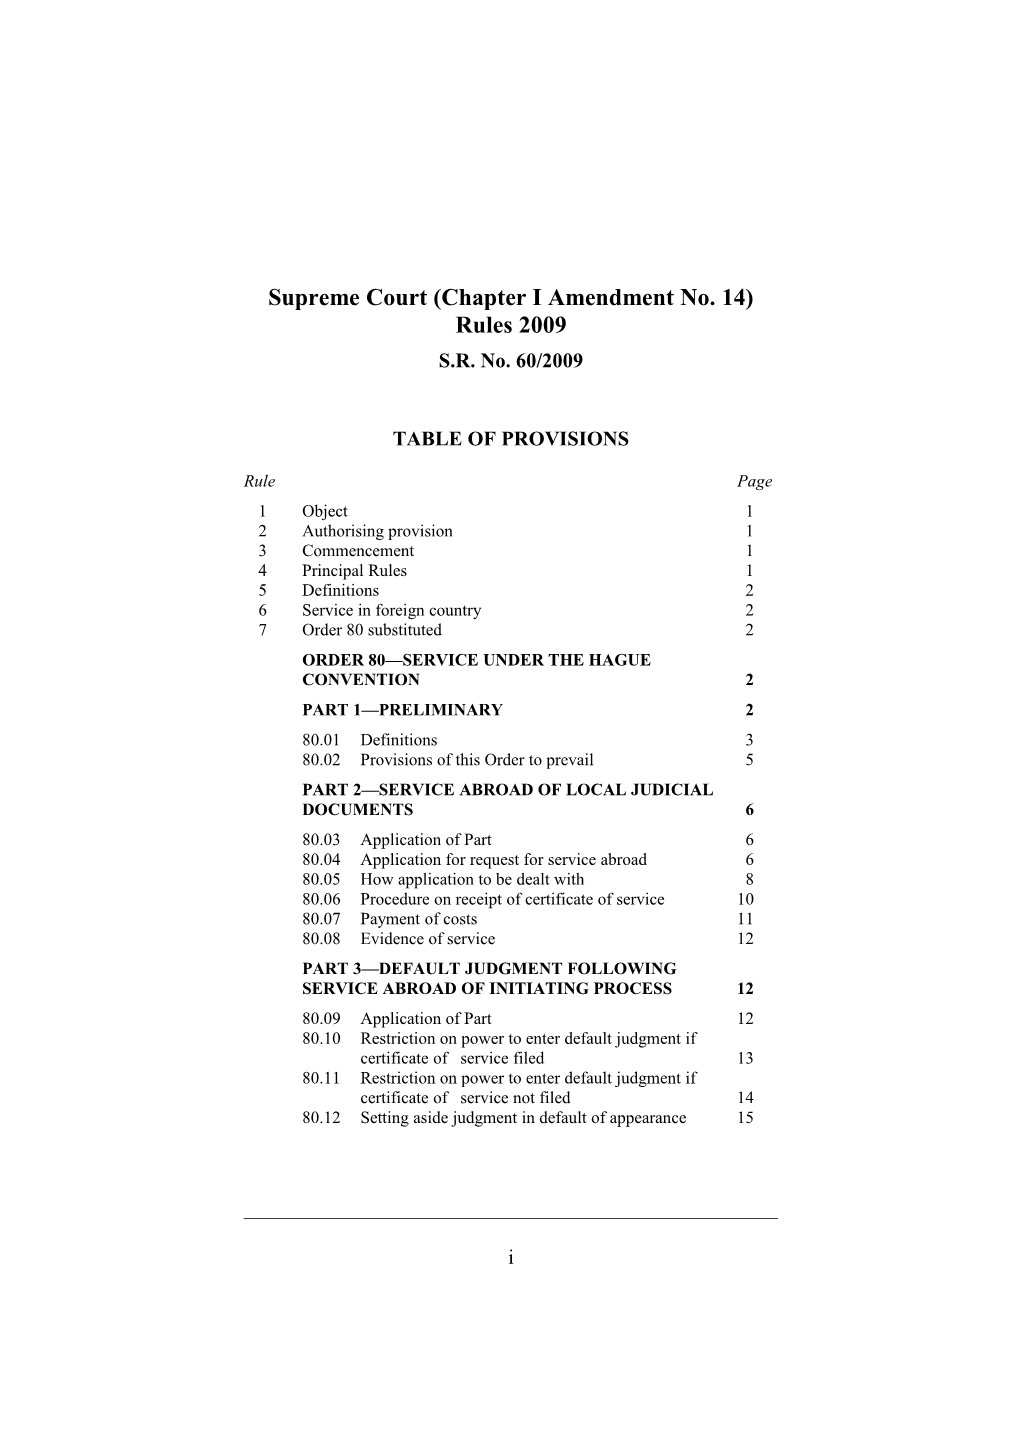 Supreme Court (Chapter I Amendment No. 14) Rules 2009